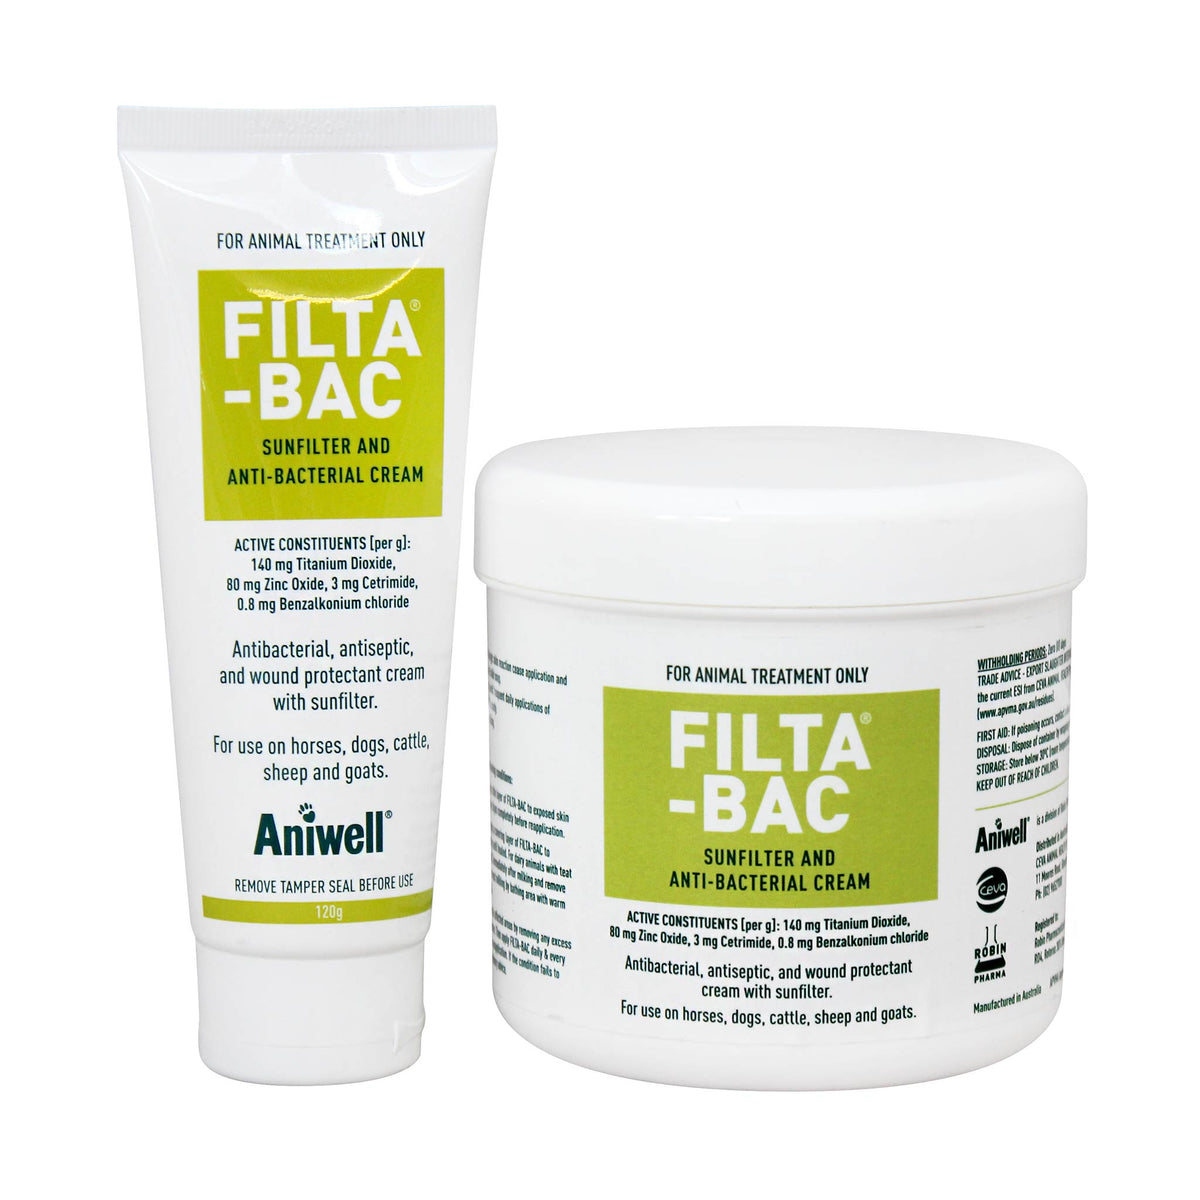 Filta-Bac Anti-Bacterial Sunscreen